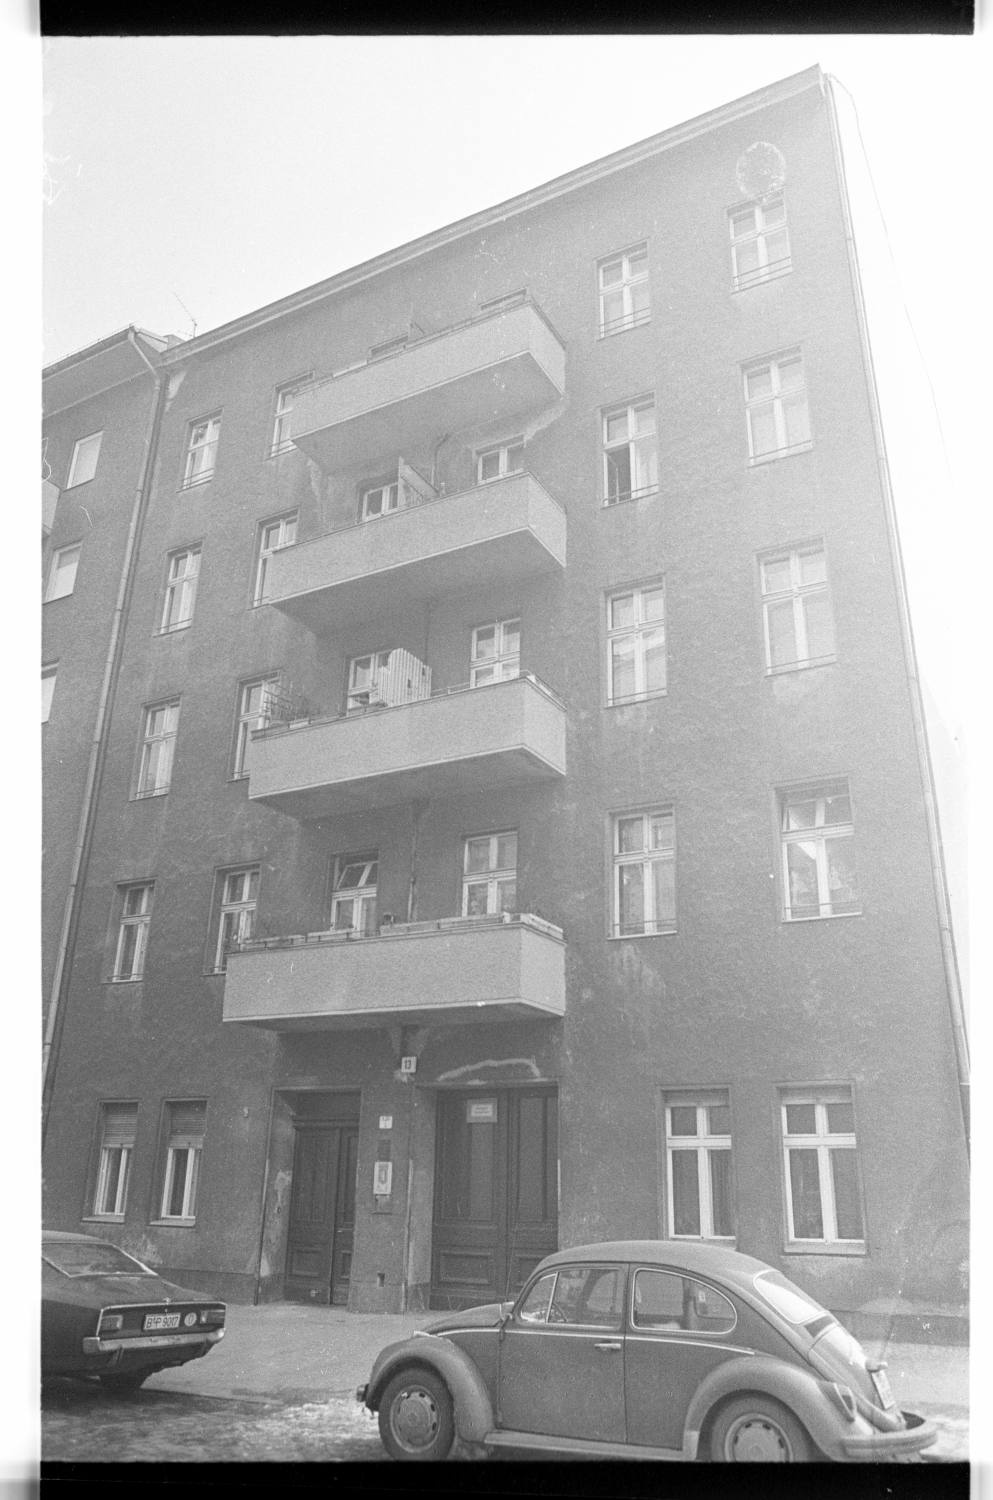 Kleinbildnegative: Obdachlosenheim, Katzlerstr. 13, 1978 (Museen Tempelhof-Schöneberg/Jürgen Henschel RR-F)